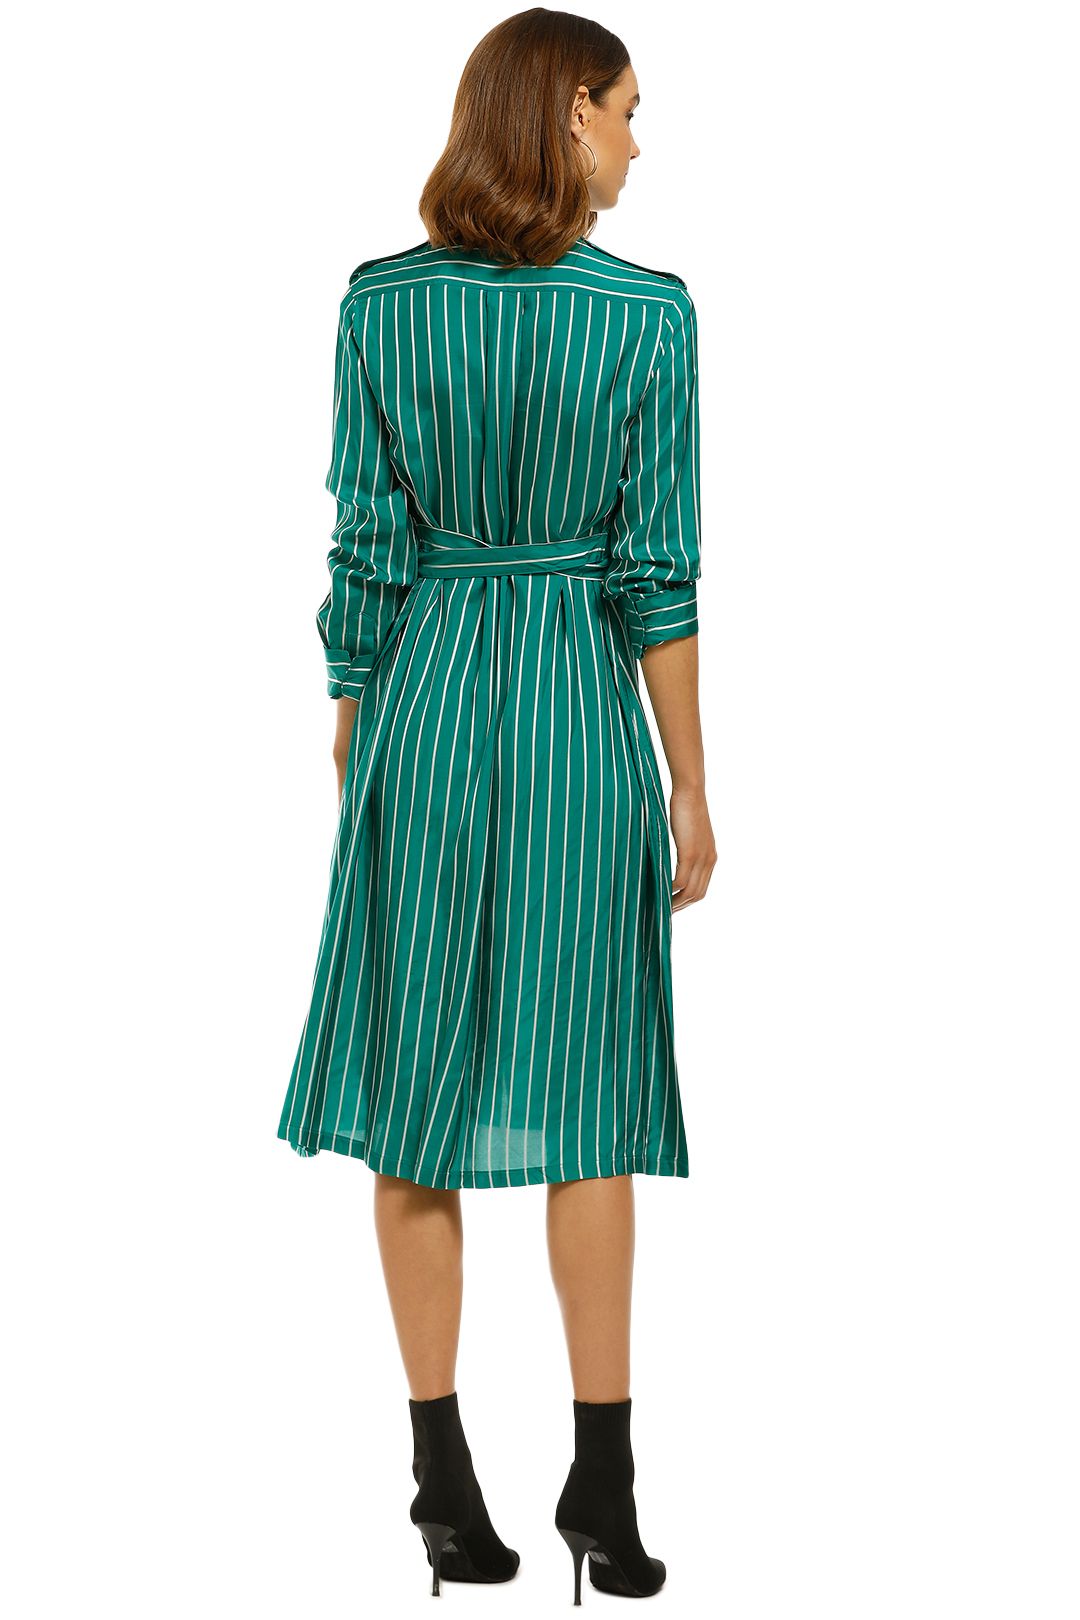 Scanlan Theodore - Stripe Shirt Dress - Emerald - Back